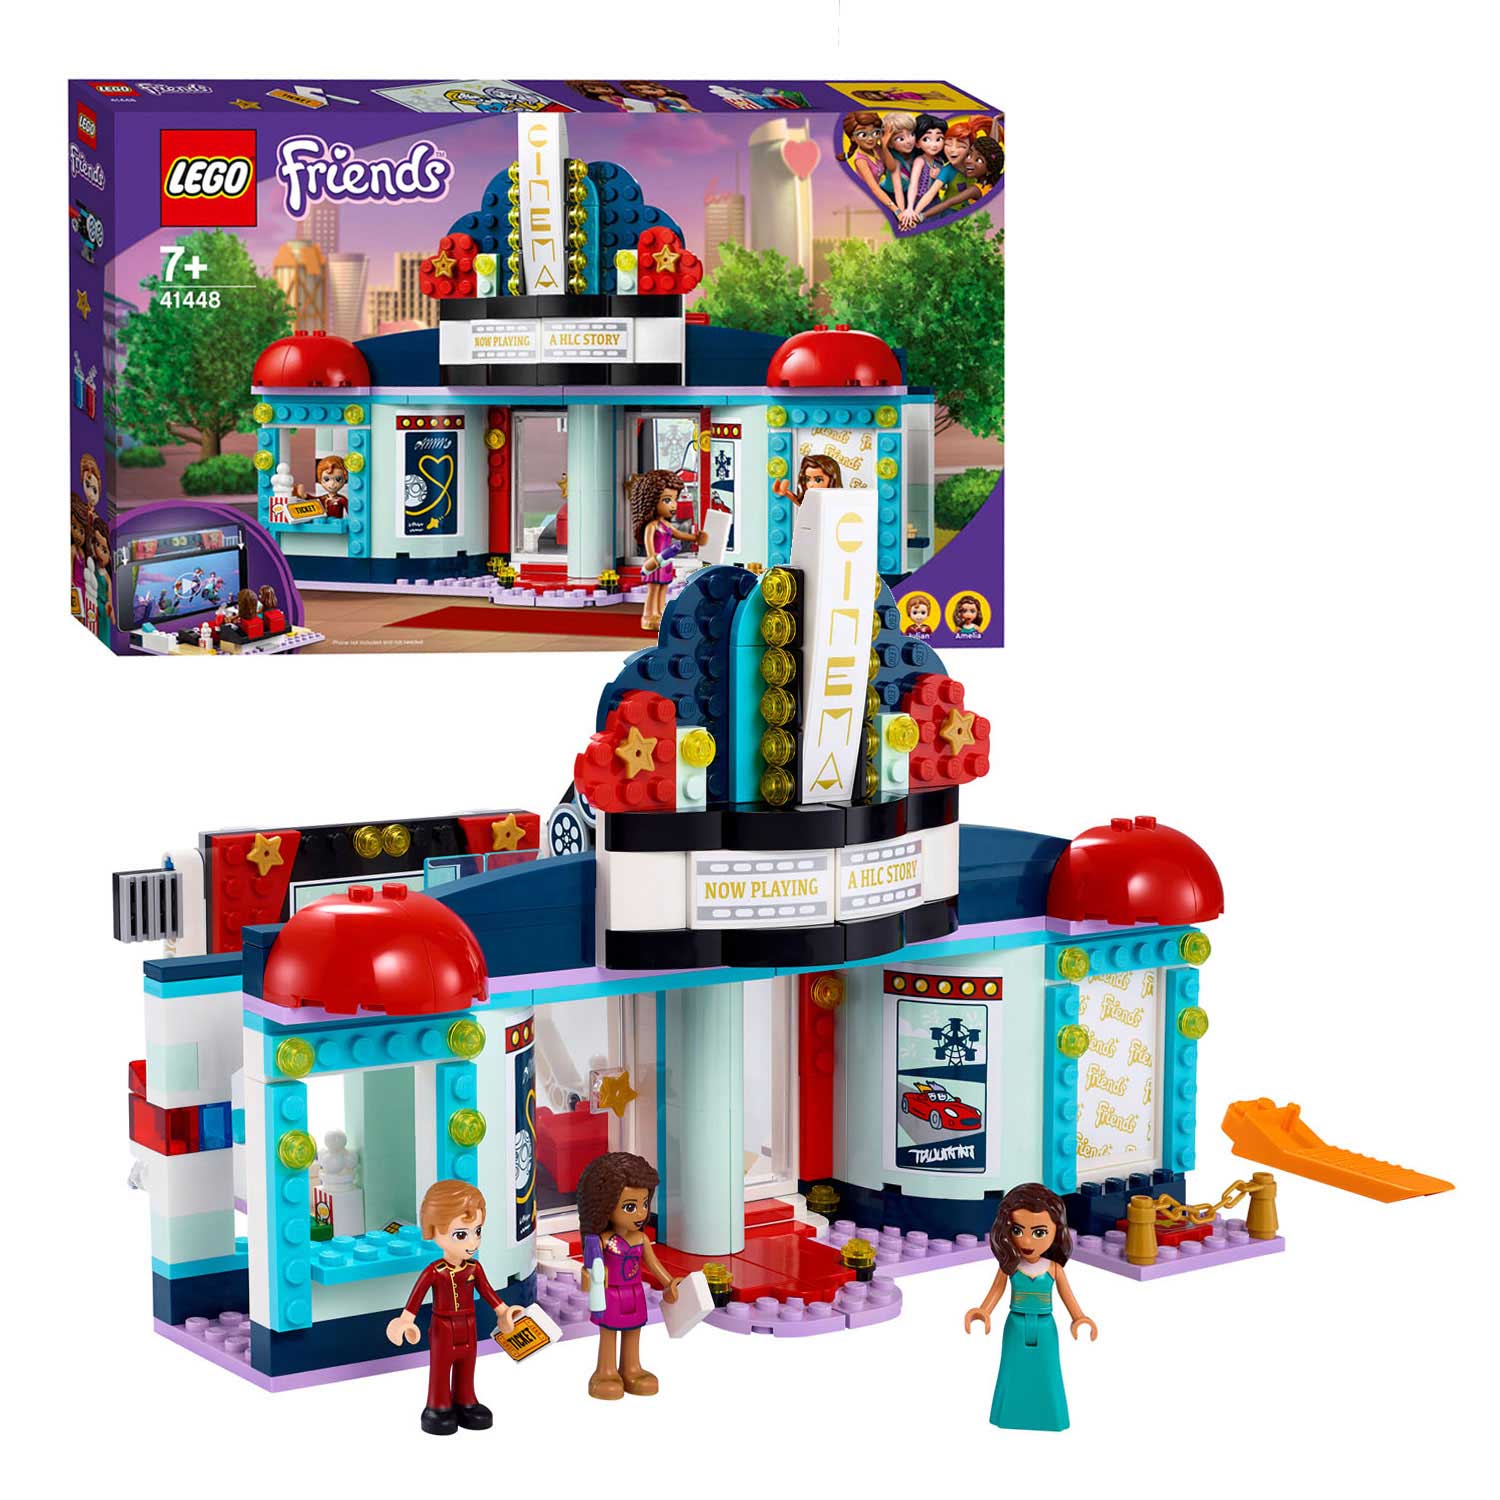 LEGO Friends 41448 Heartlake | Thimble Toys Cinema City